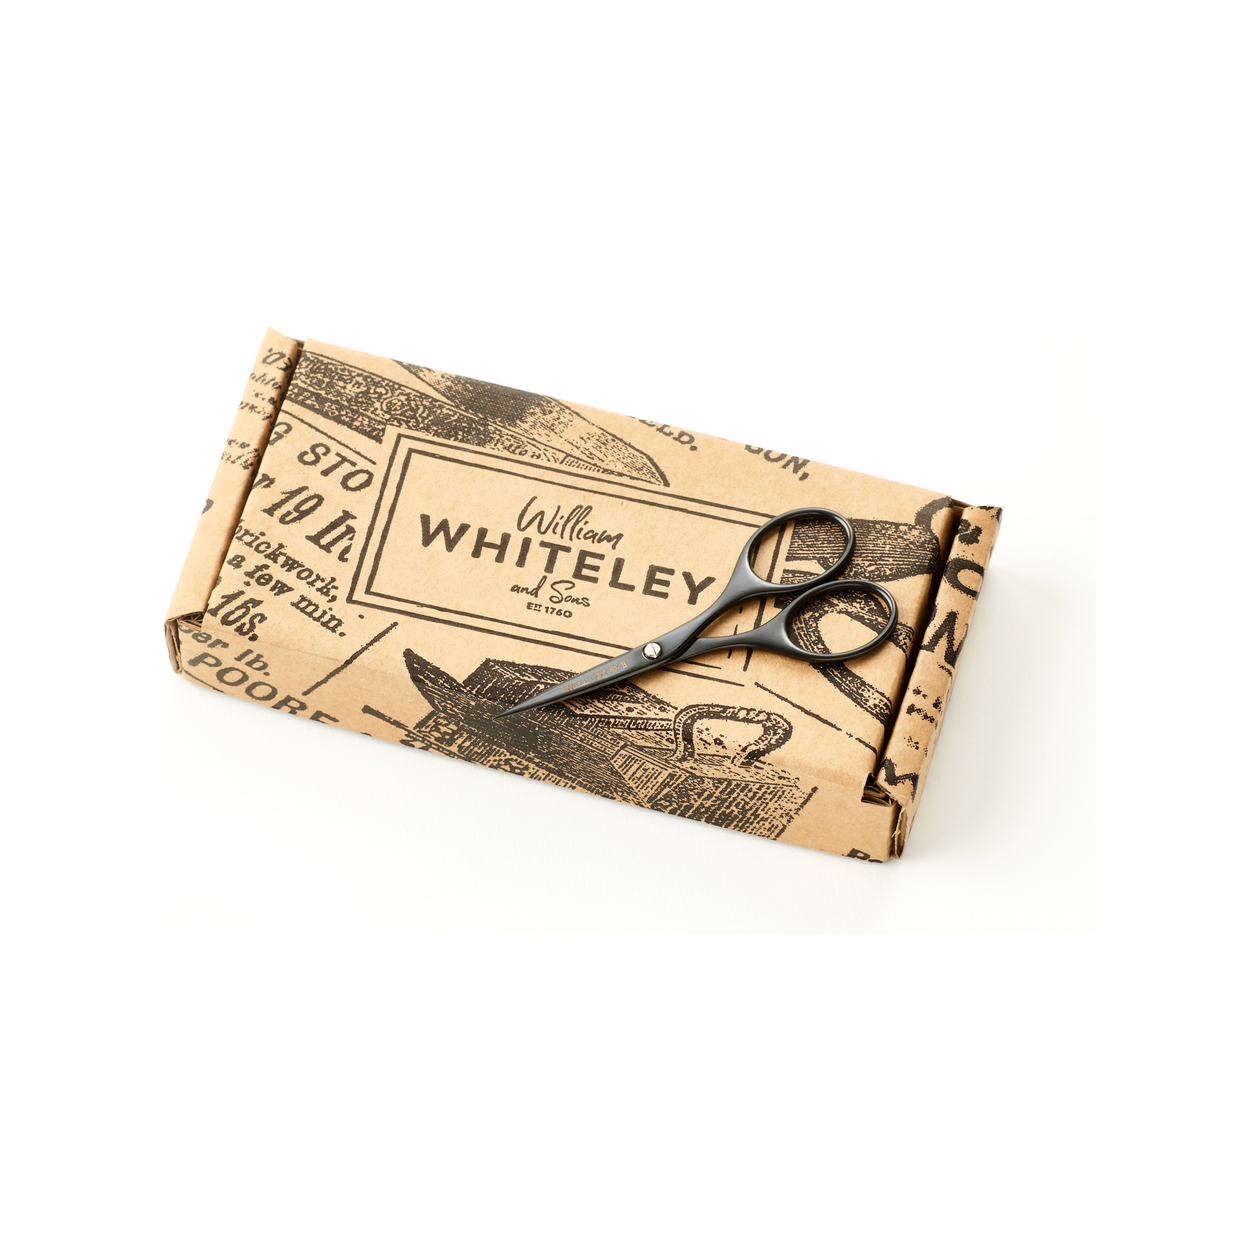 William Whiteley Noir Embroidery Scissors